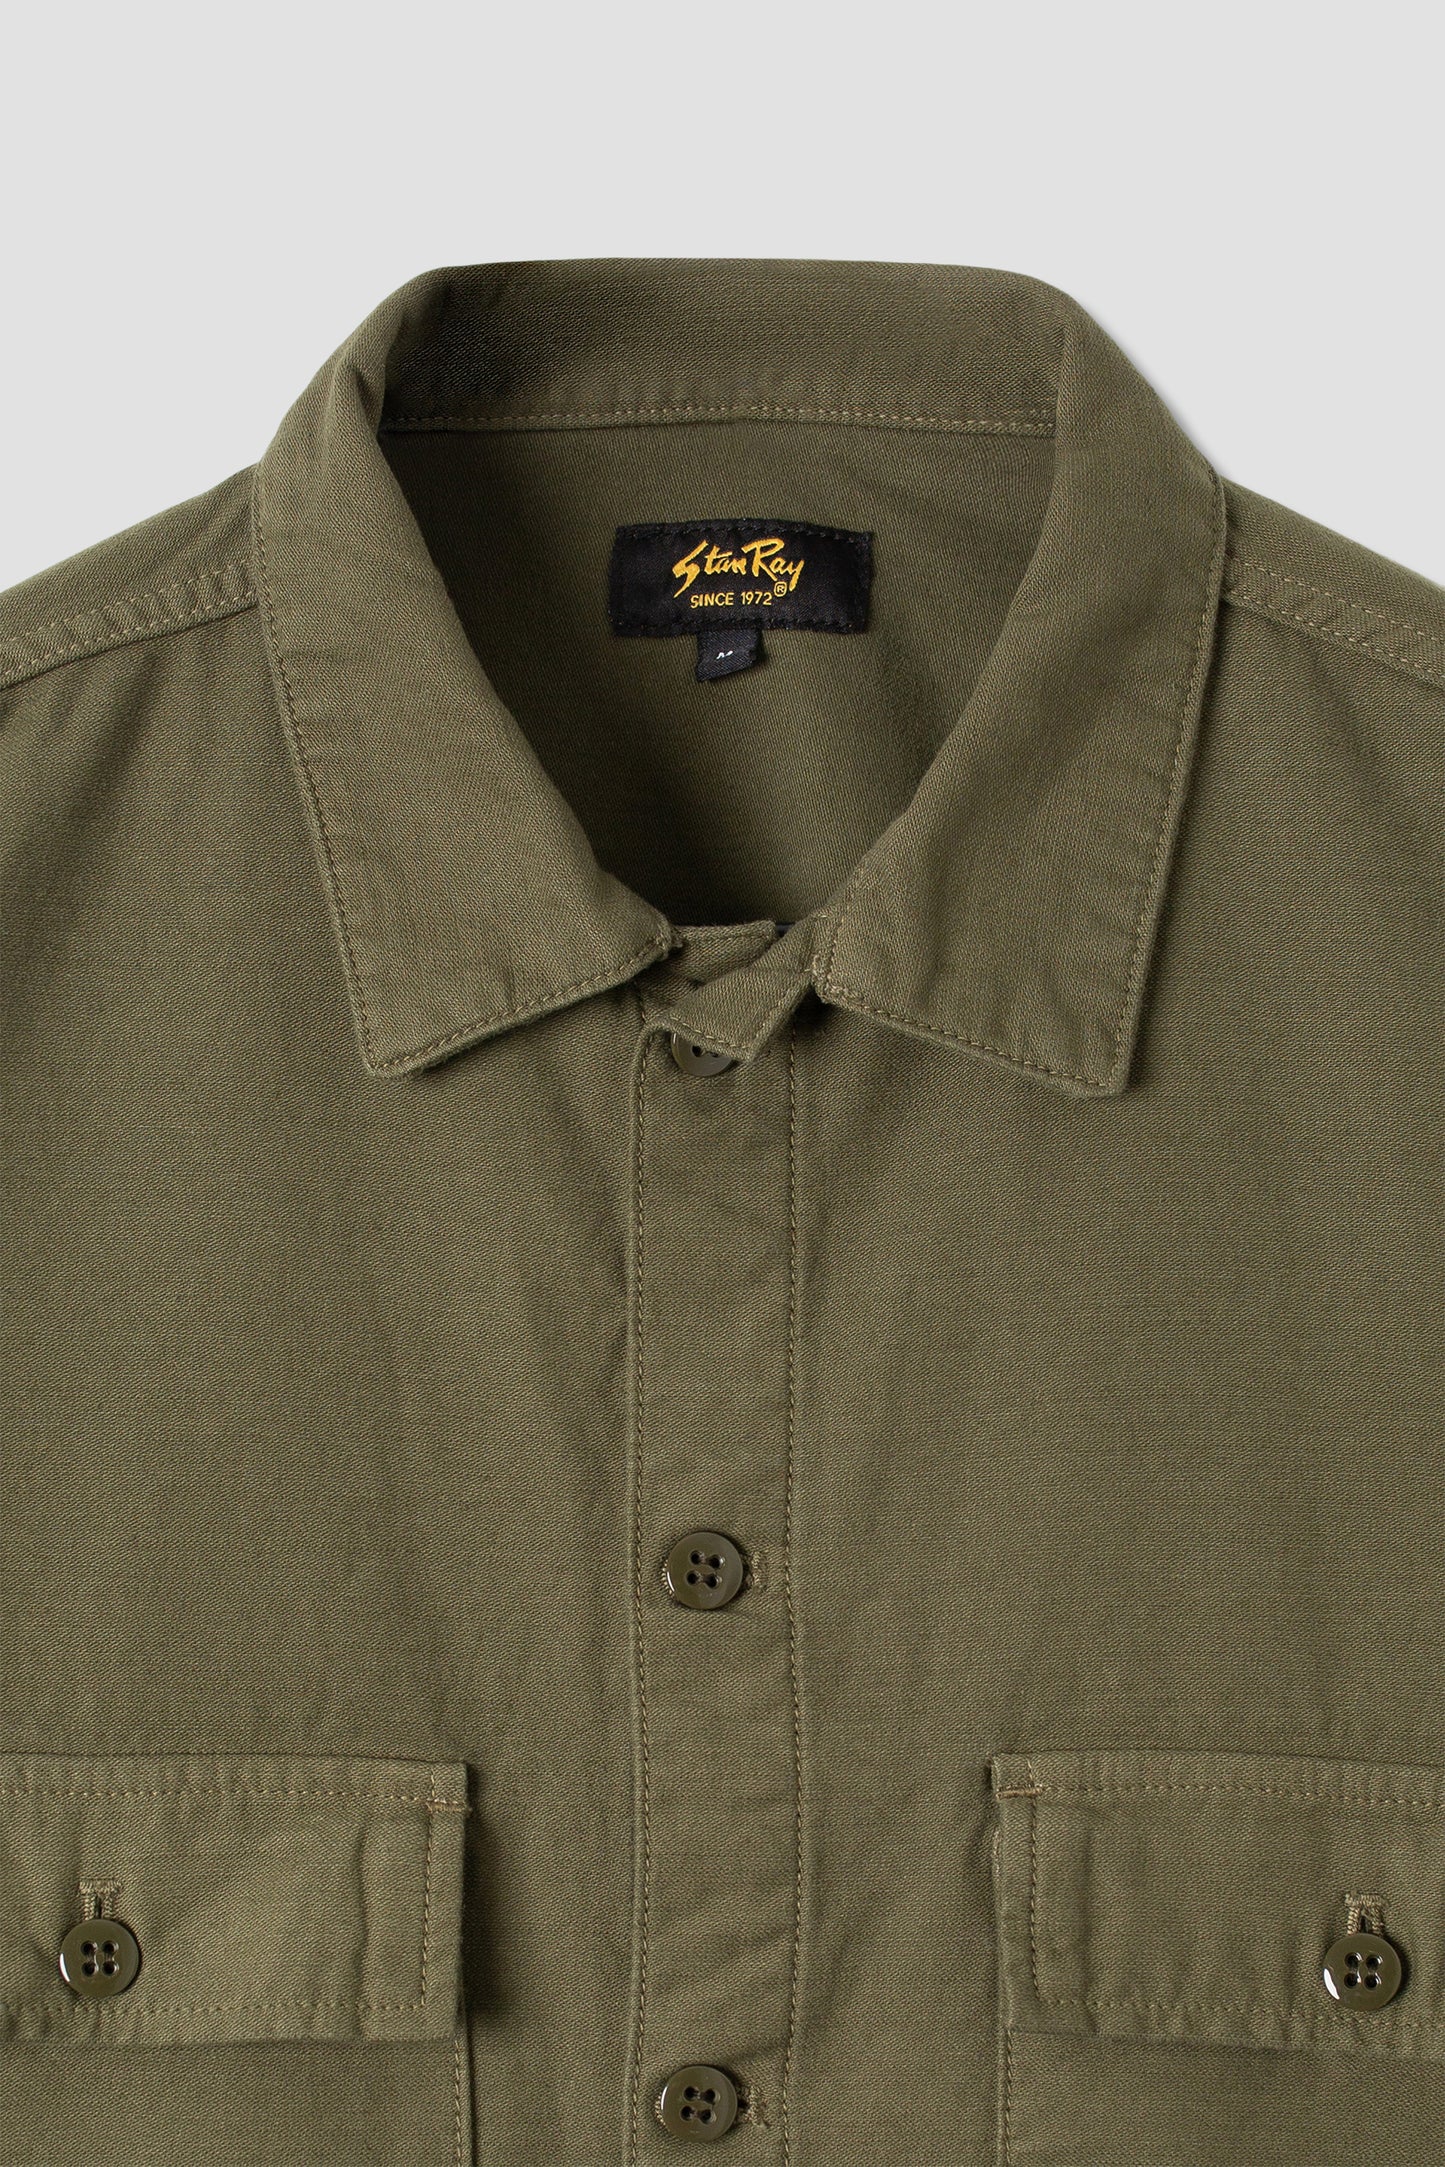 CPO Shirt (Olive Sateen)